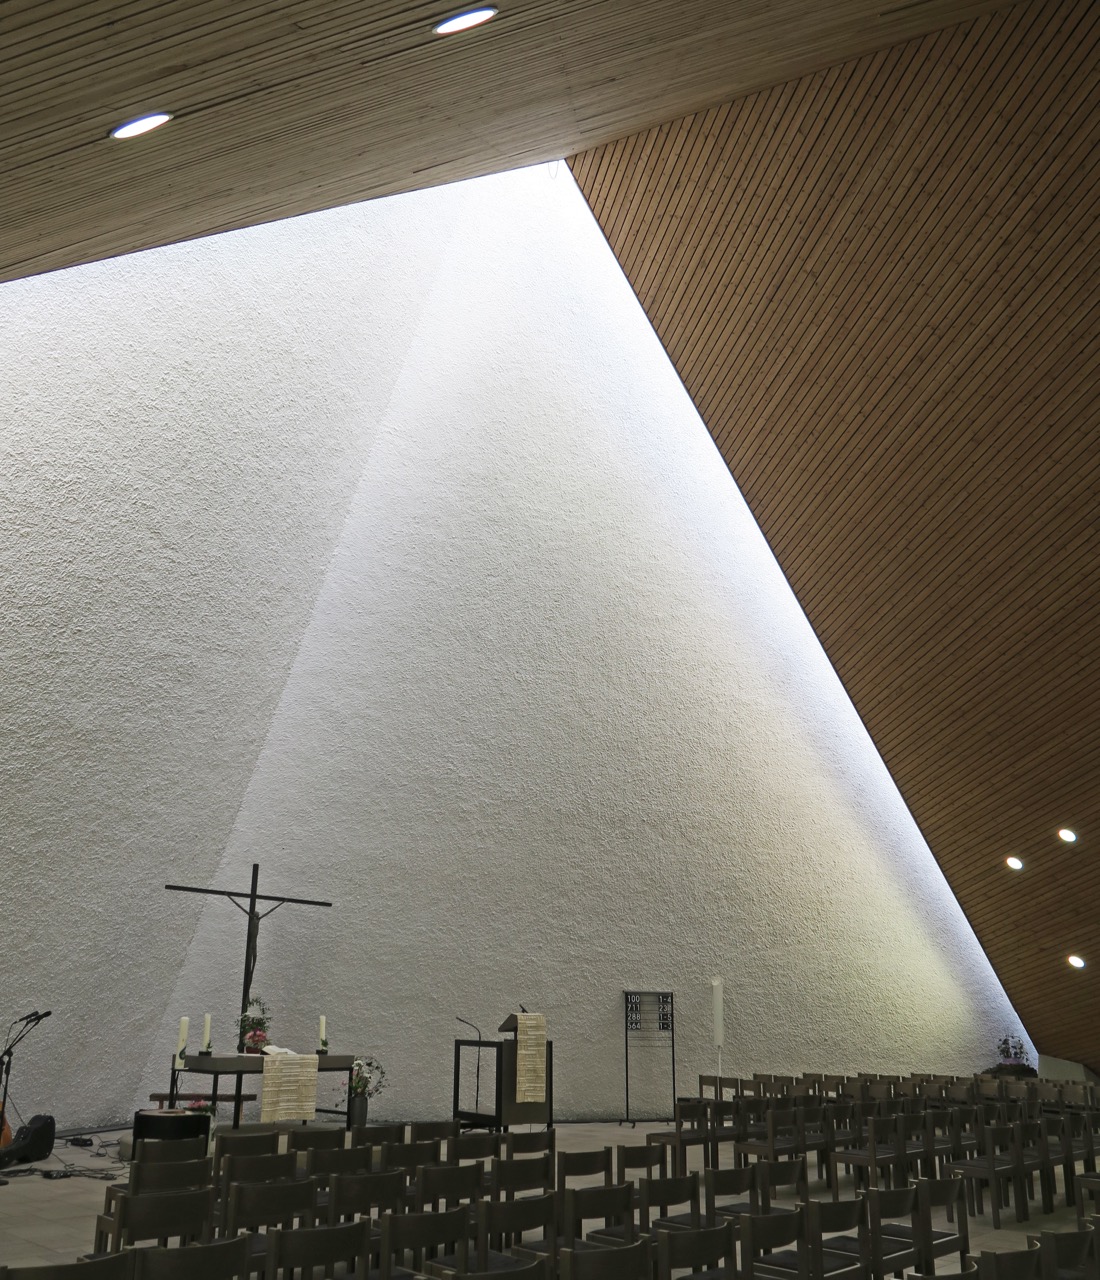 Interior image